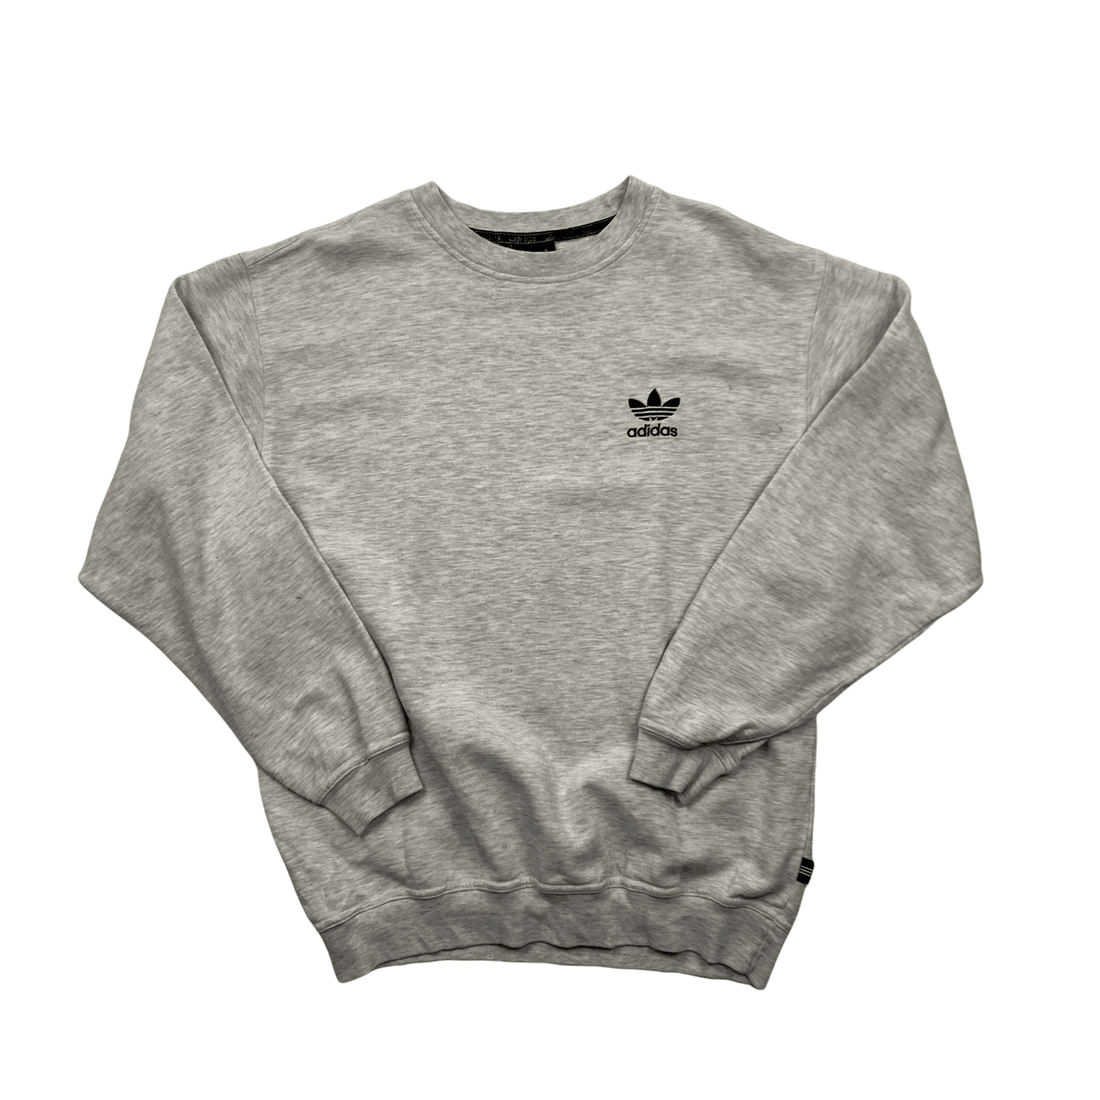 Vintage 90s Grey Adidas Sweatshirt - Medium - The Streetwear Studio